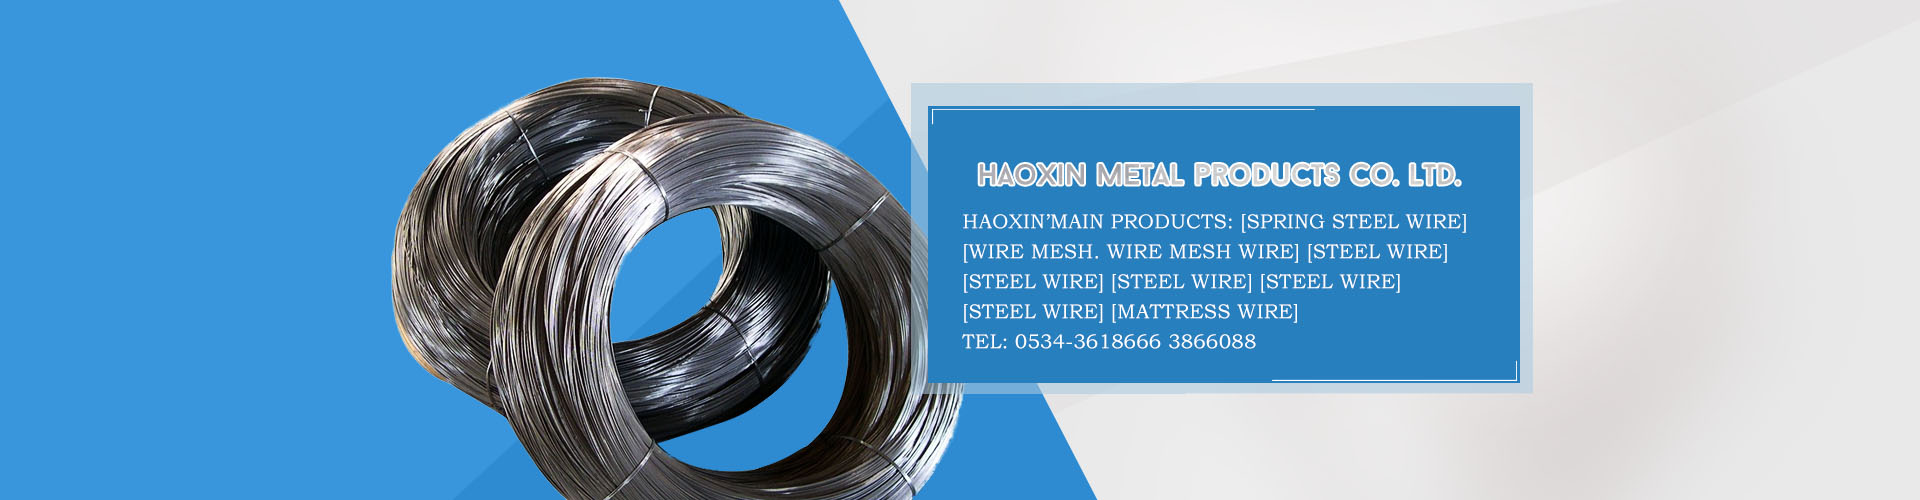 Haoxin metal products co. LTD.